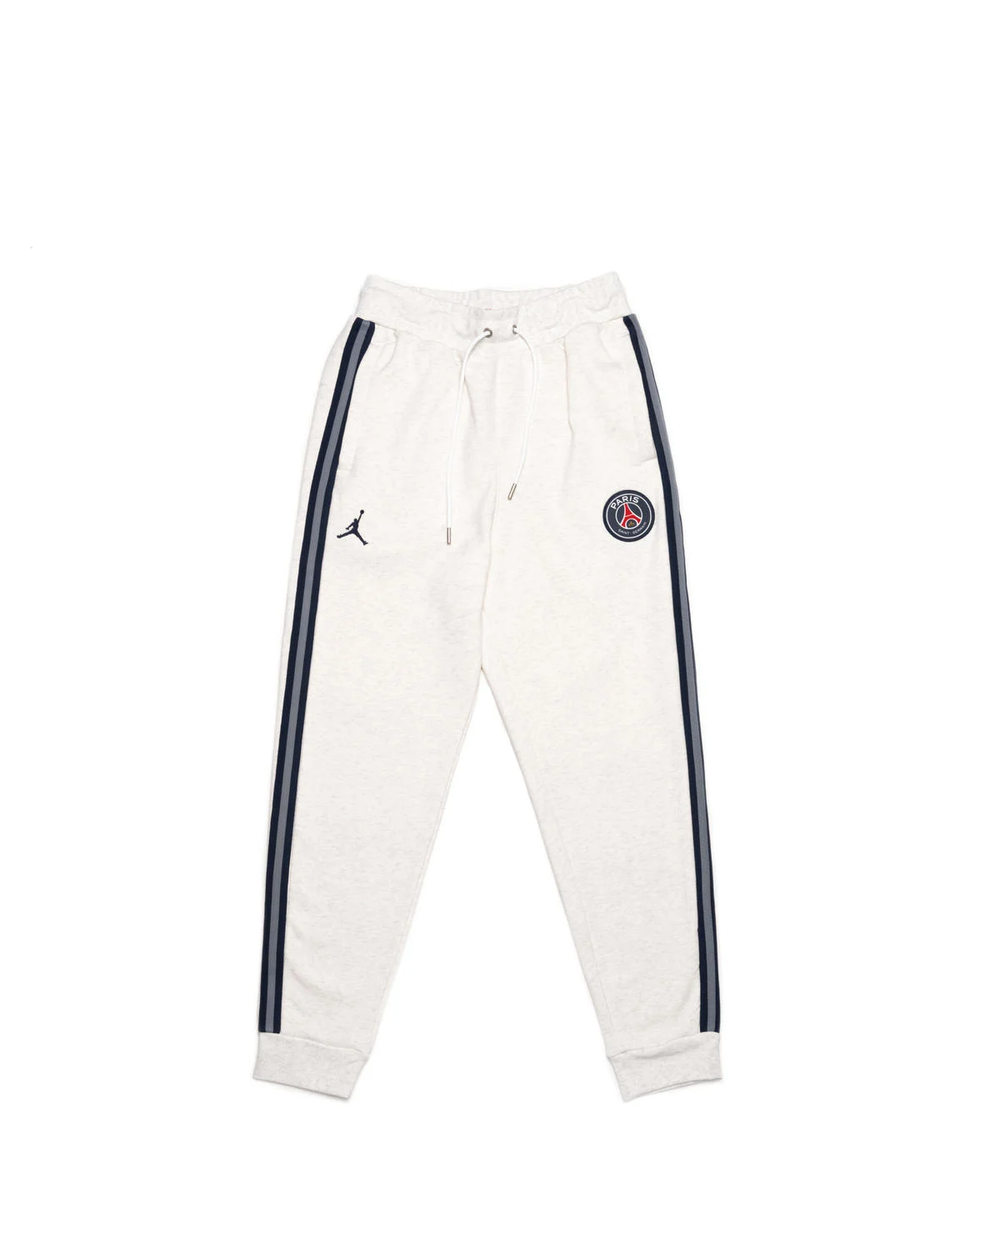 pastel Children's Palace compression Up to 55% OFF the PSG x Air Jordan Fleece Pants — Sneaker Shouts